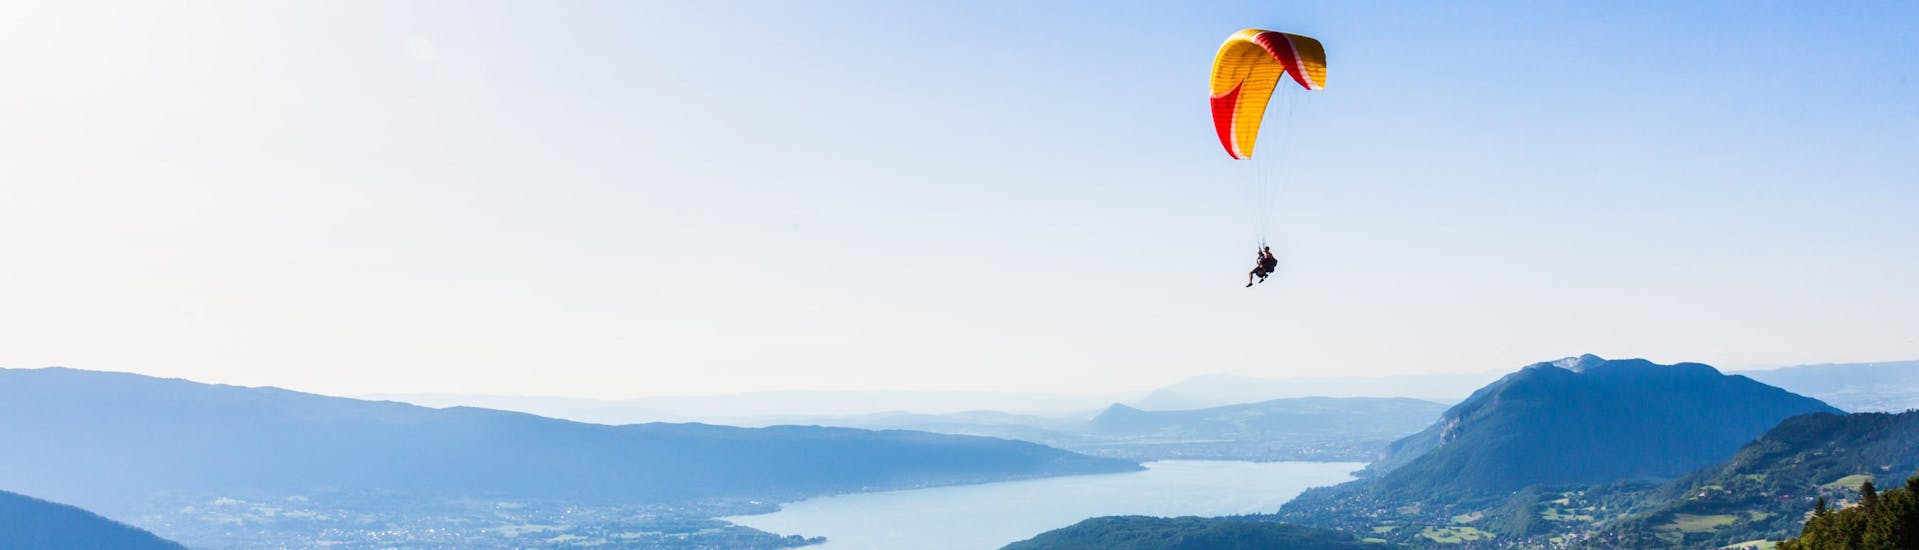 The paragliding hotspot Lac d'Annecy